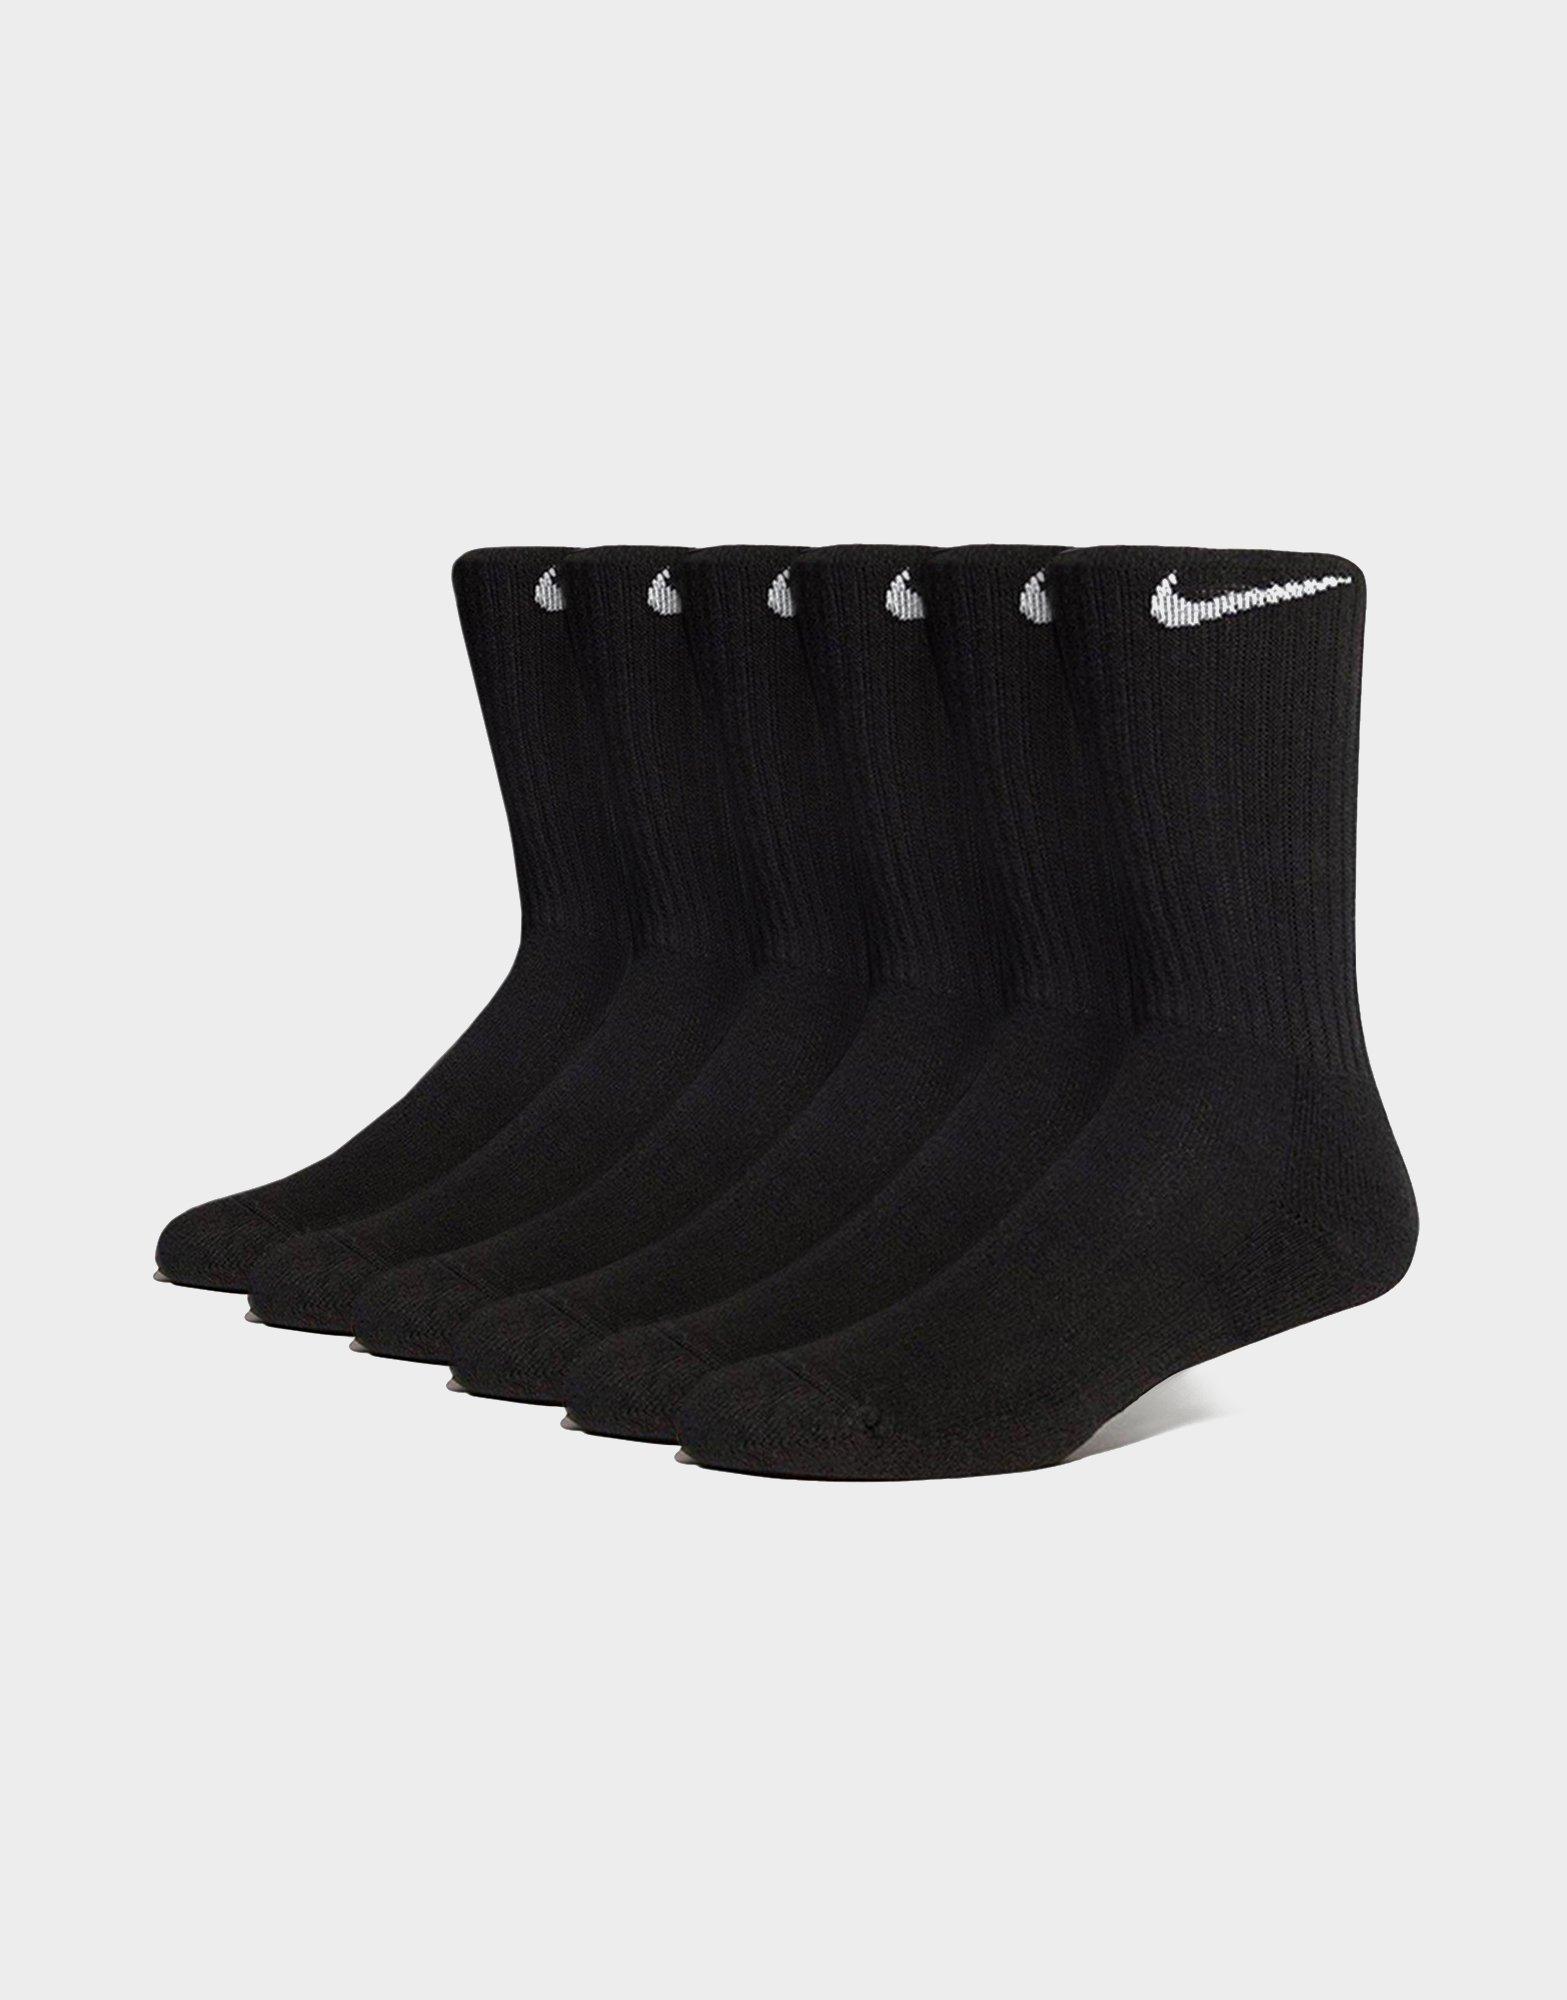 nike black crew socks 6 pack